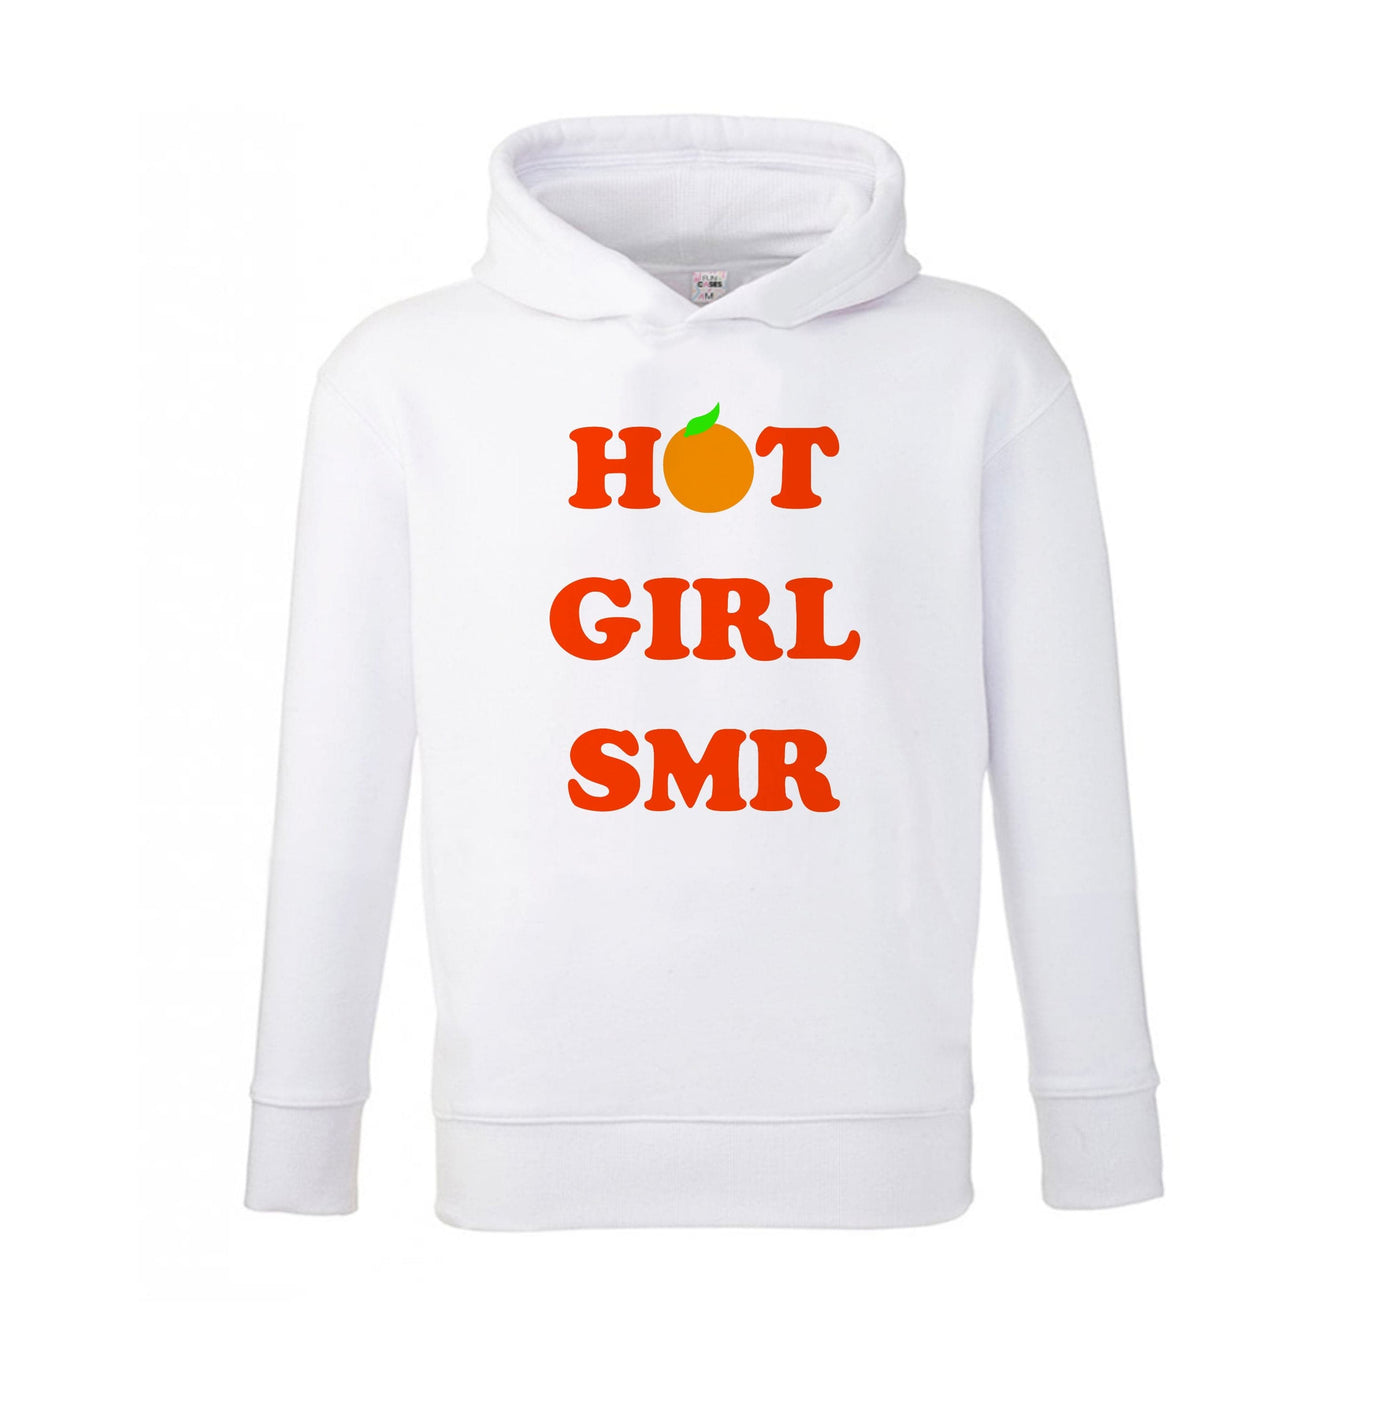 Hot Girl SMR - Summer Kids Hoodie